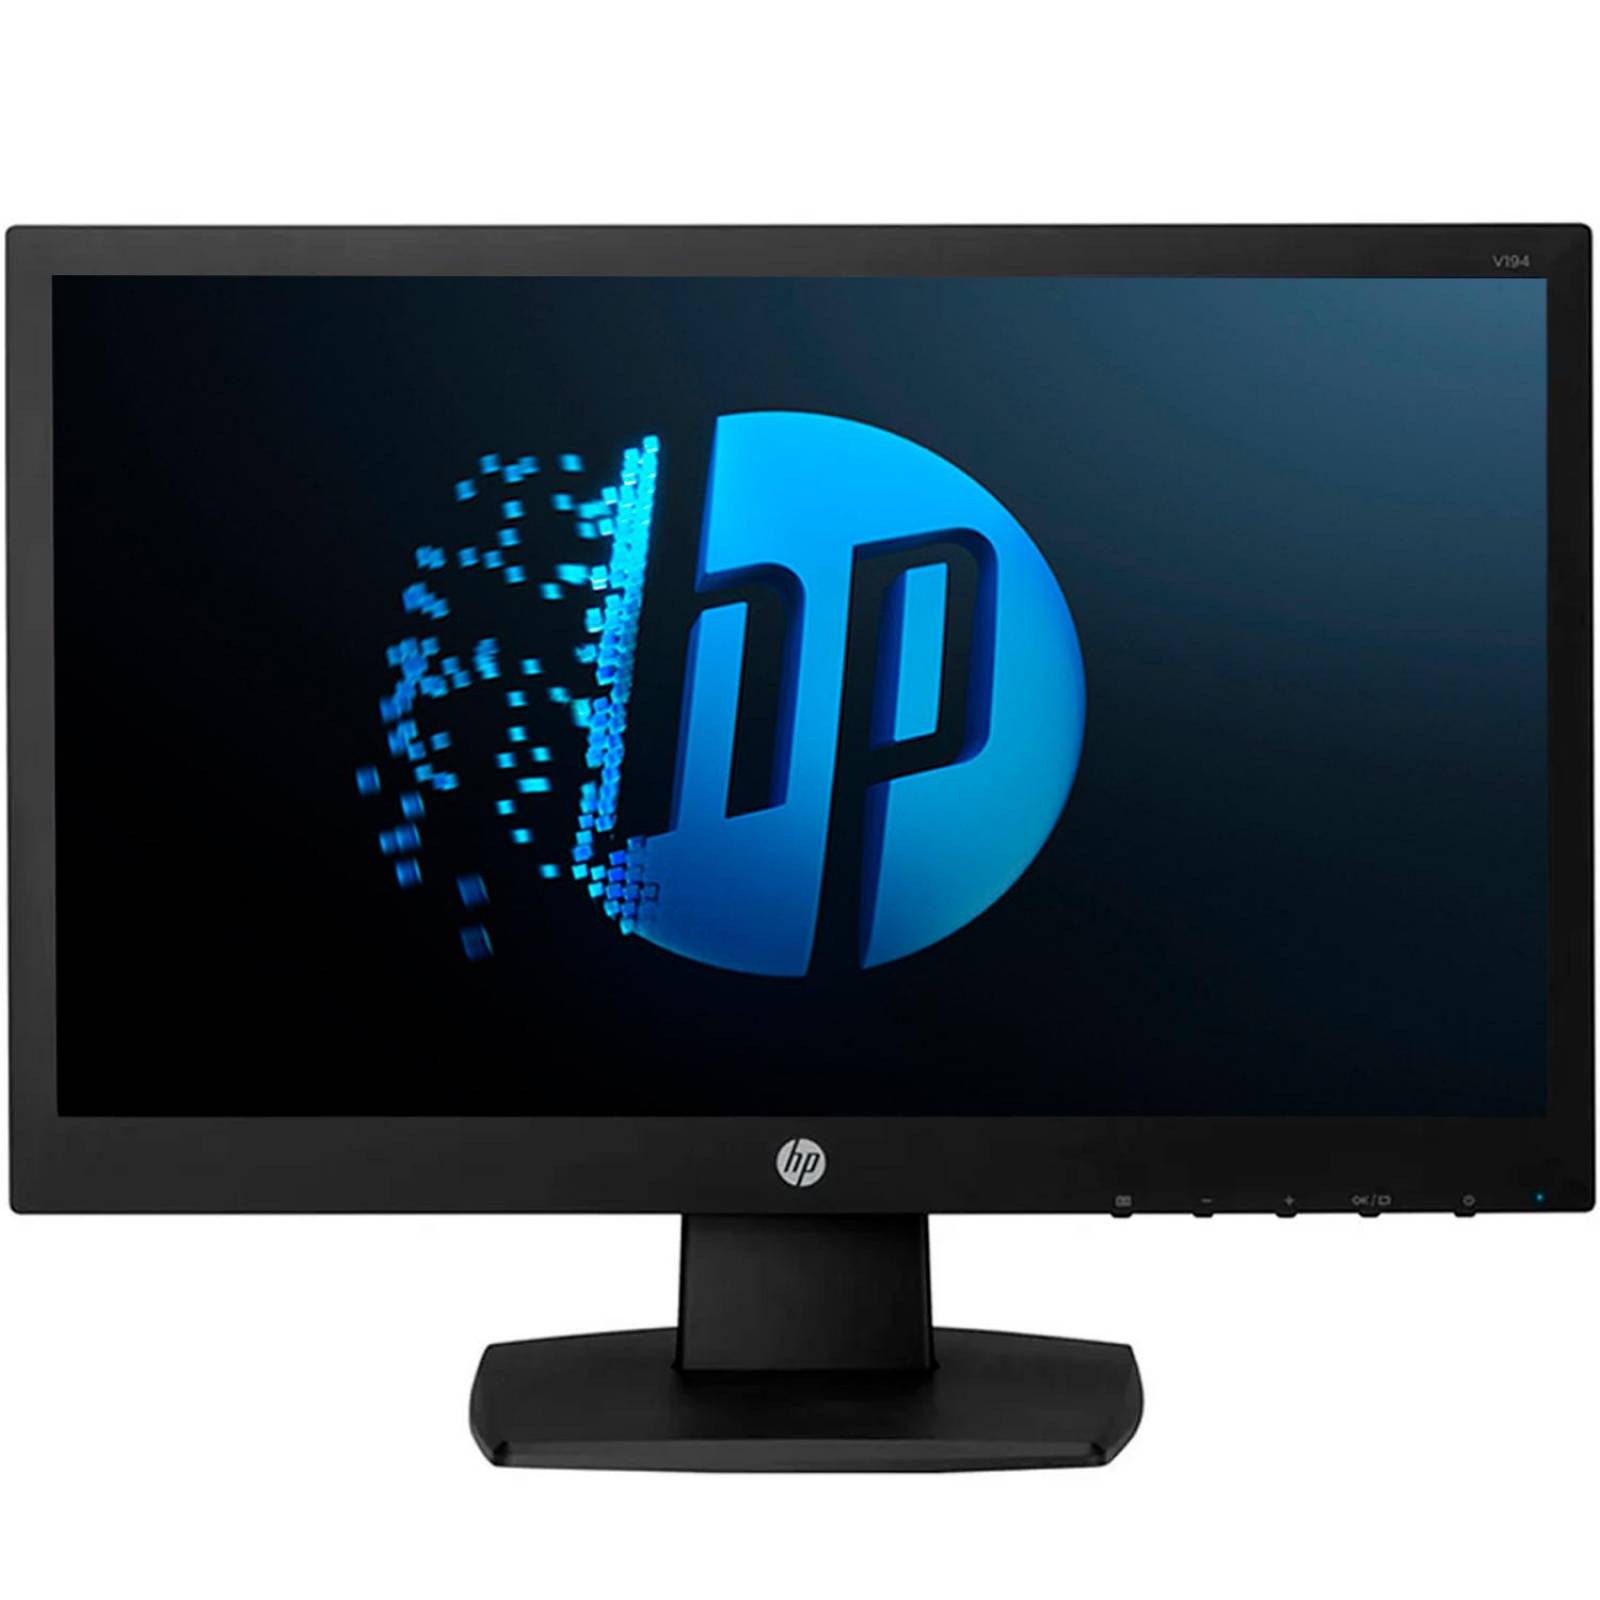 PC Gamer HP Slimline Radeon R4 Amd A6 9225 8GB 1TB DVDRW WIFI Monitor 18.5 